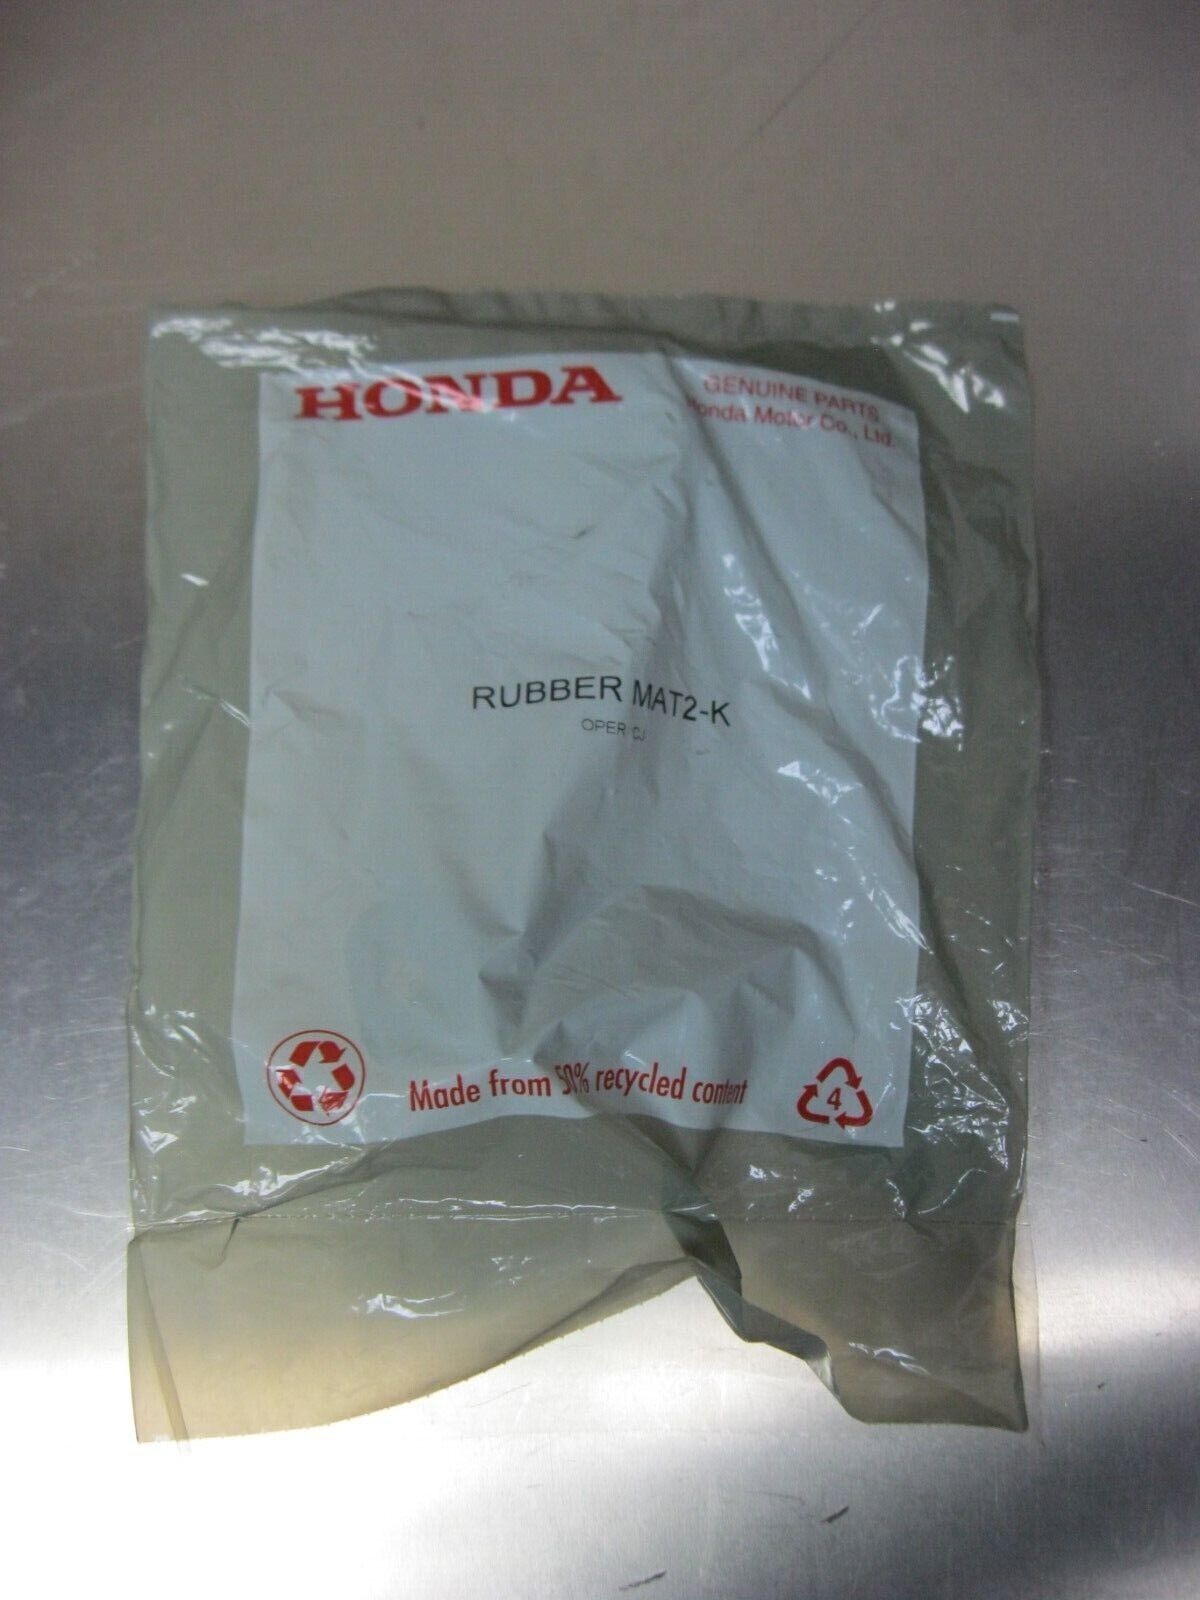 Honda OEM Rubber MAT2-K